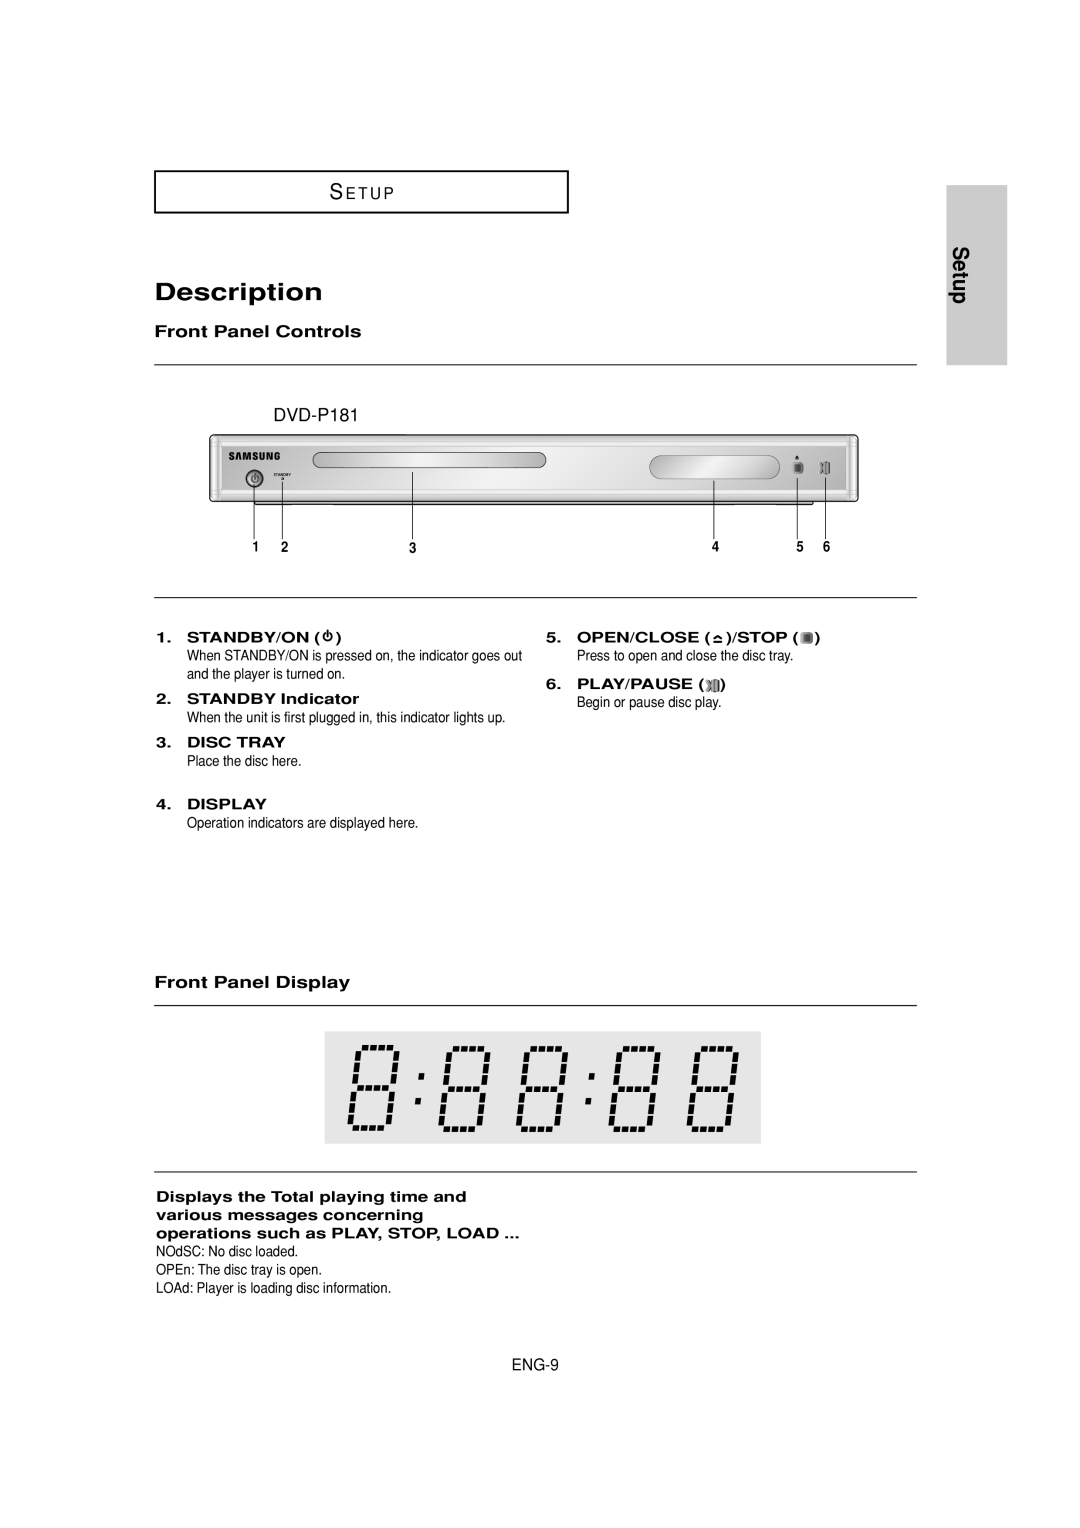 Samsung DVD-P181 manual Description, Setup, S E T U P, Front Panel Controls, Front Panel Display, ENG-9 